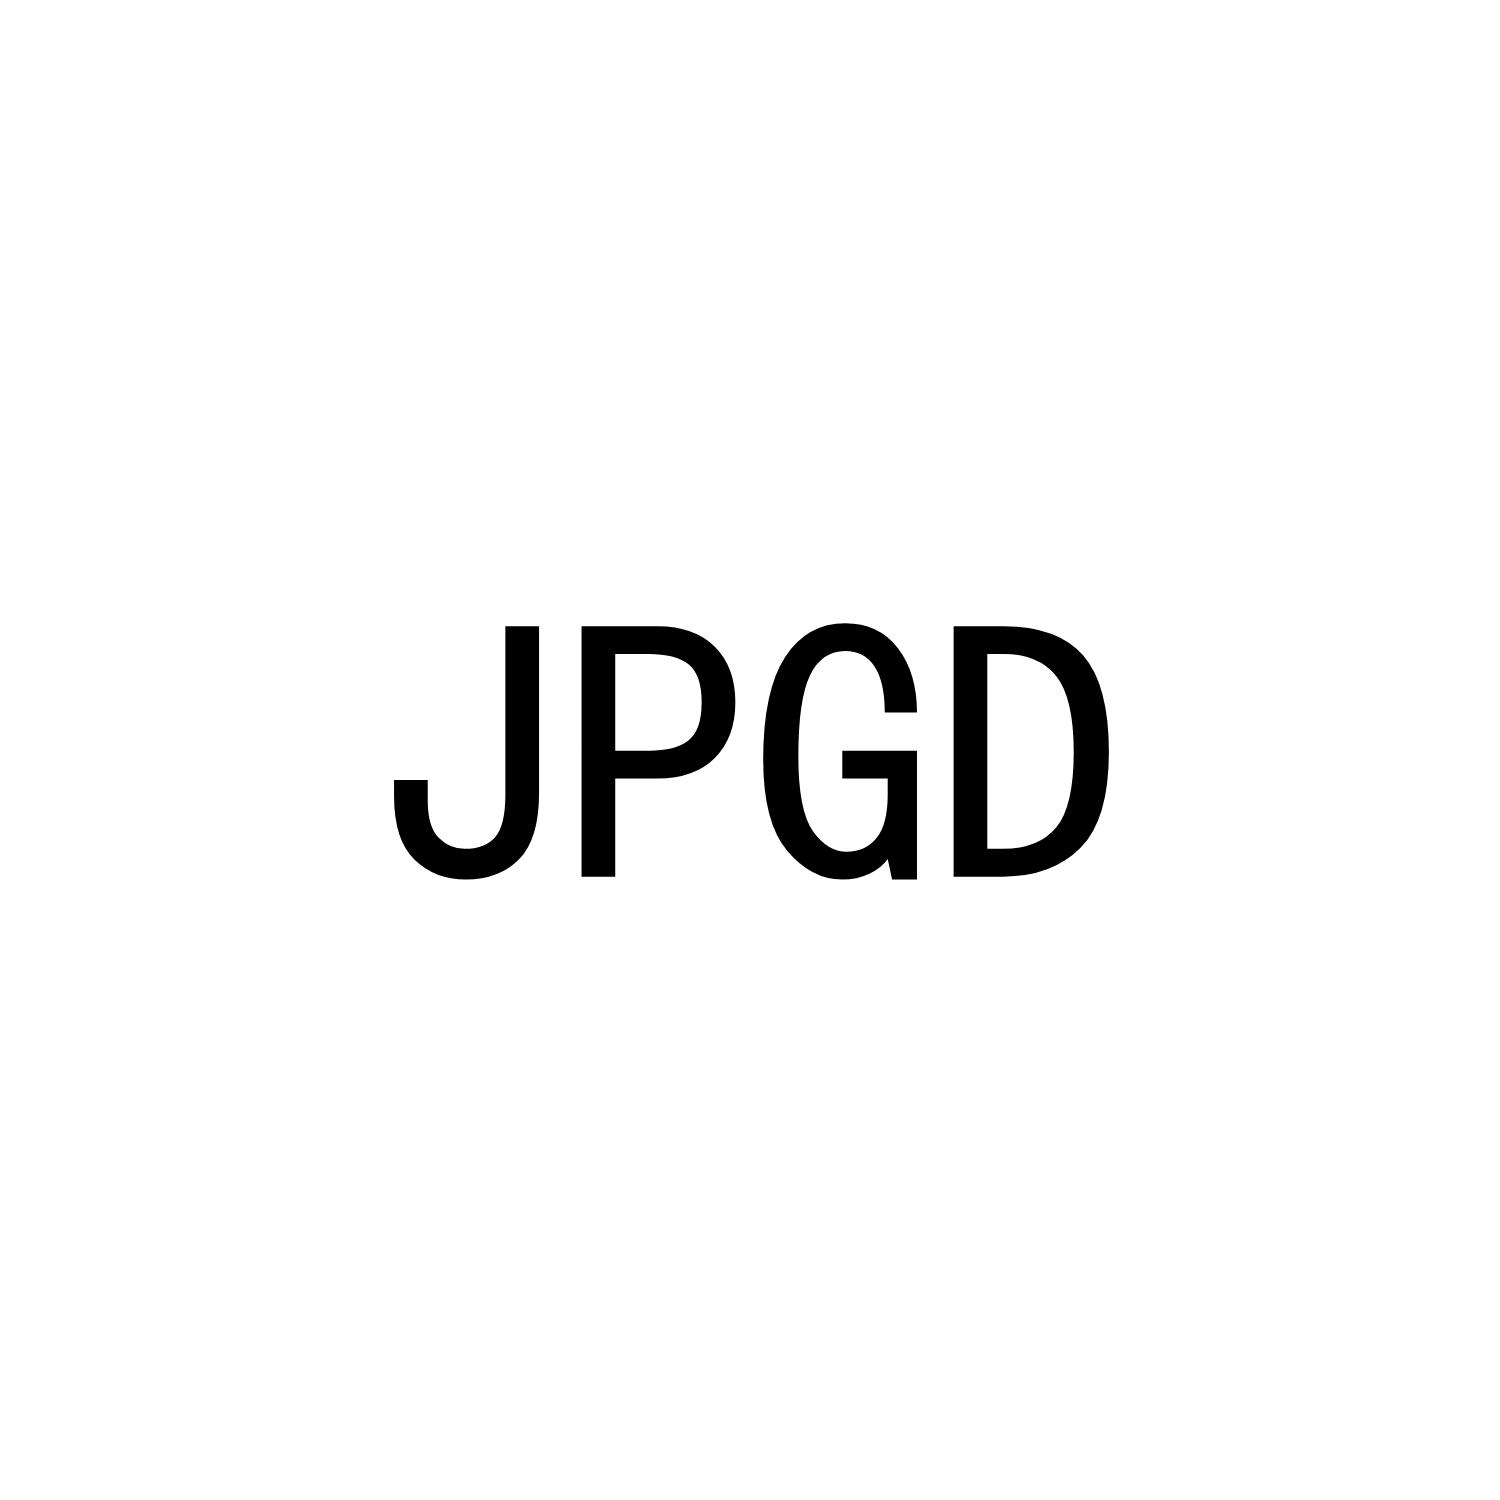 JPGD